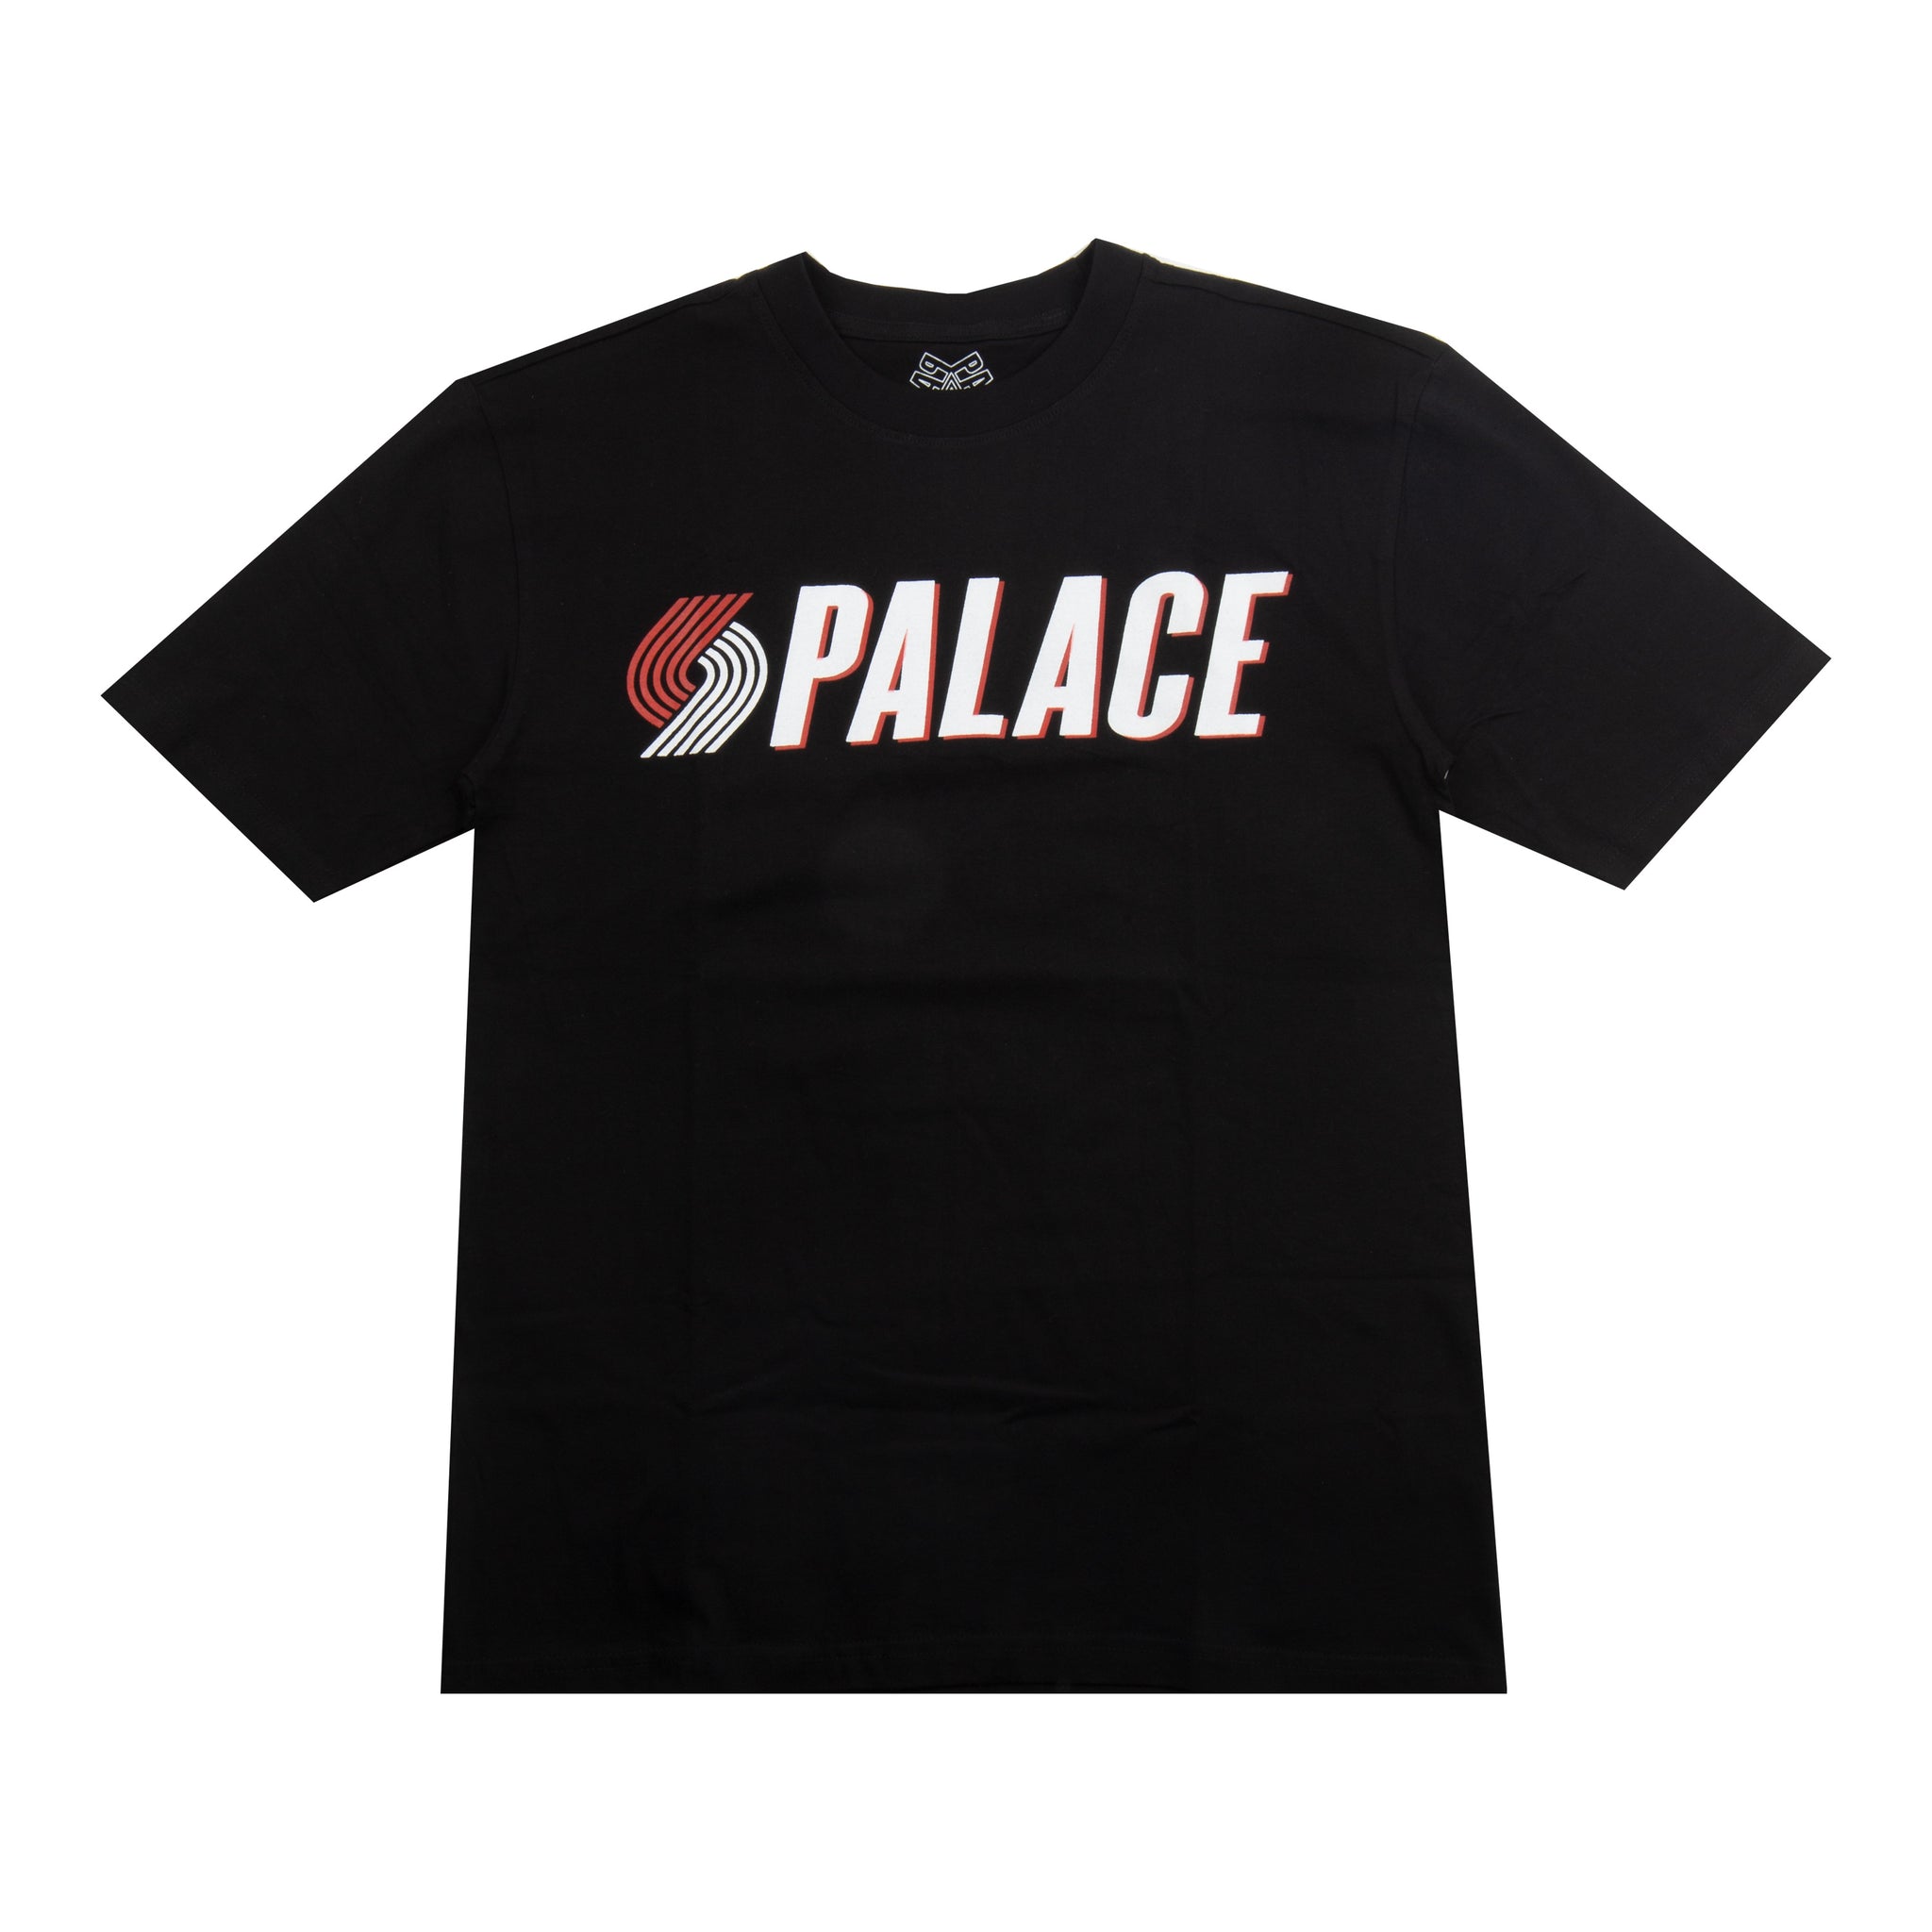 Palace Black Blazin' Tee